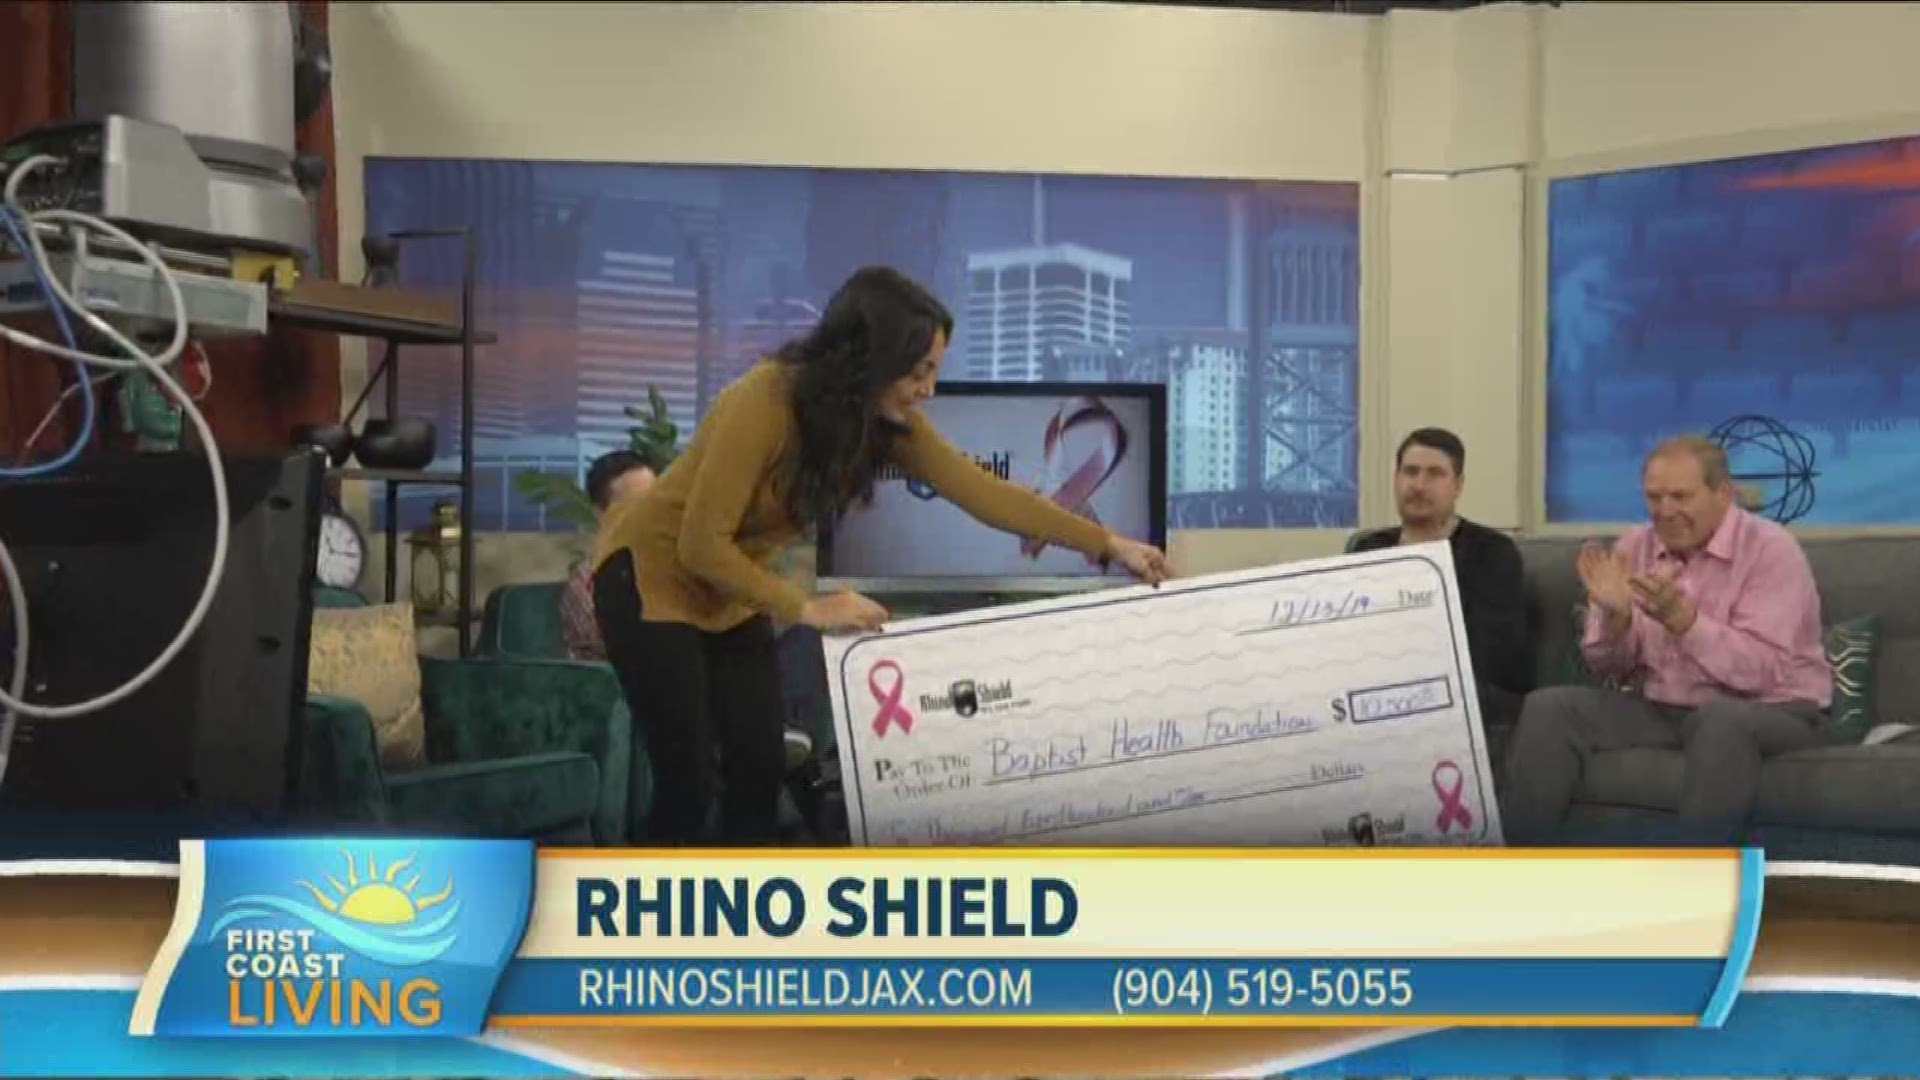 Rhino Shield has a big announcement to make!